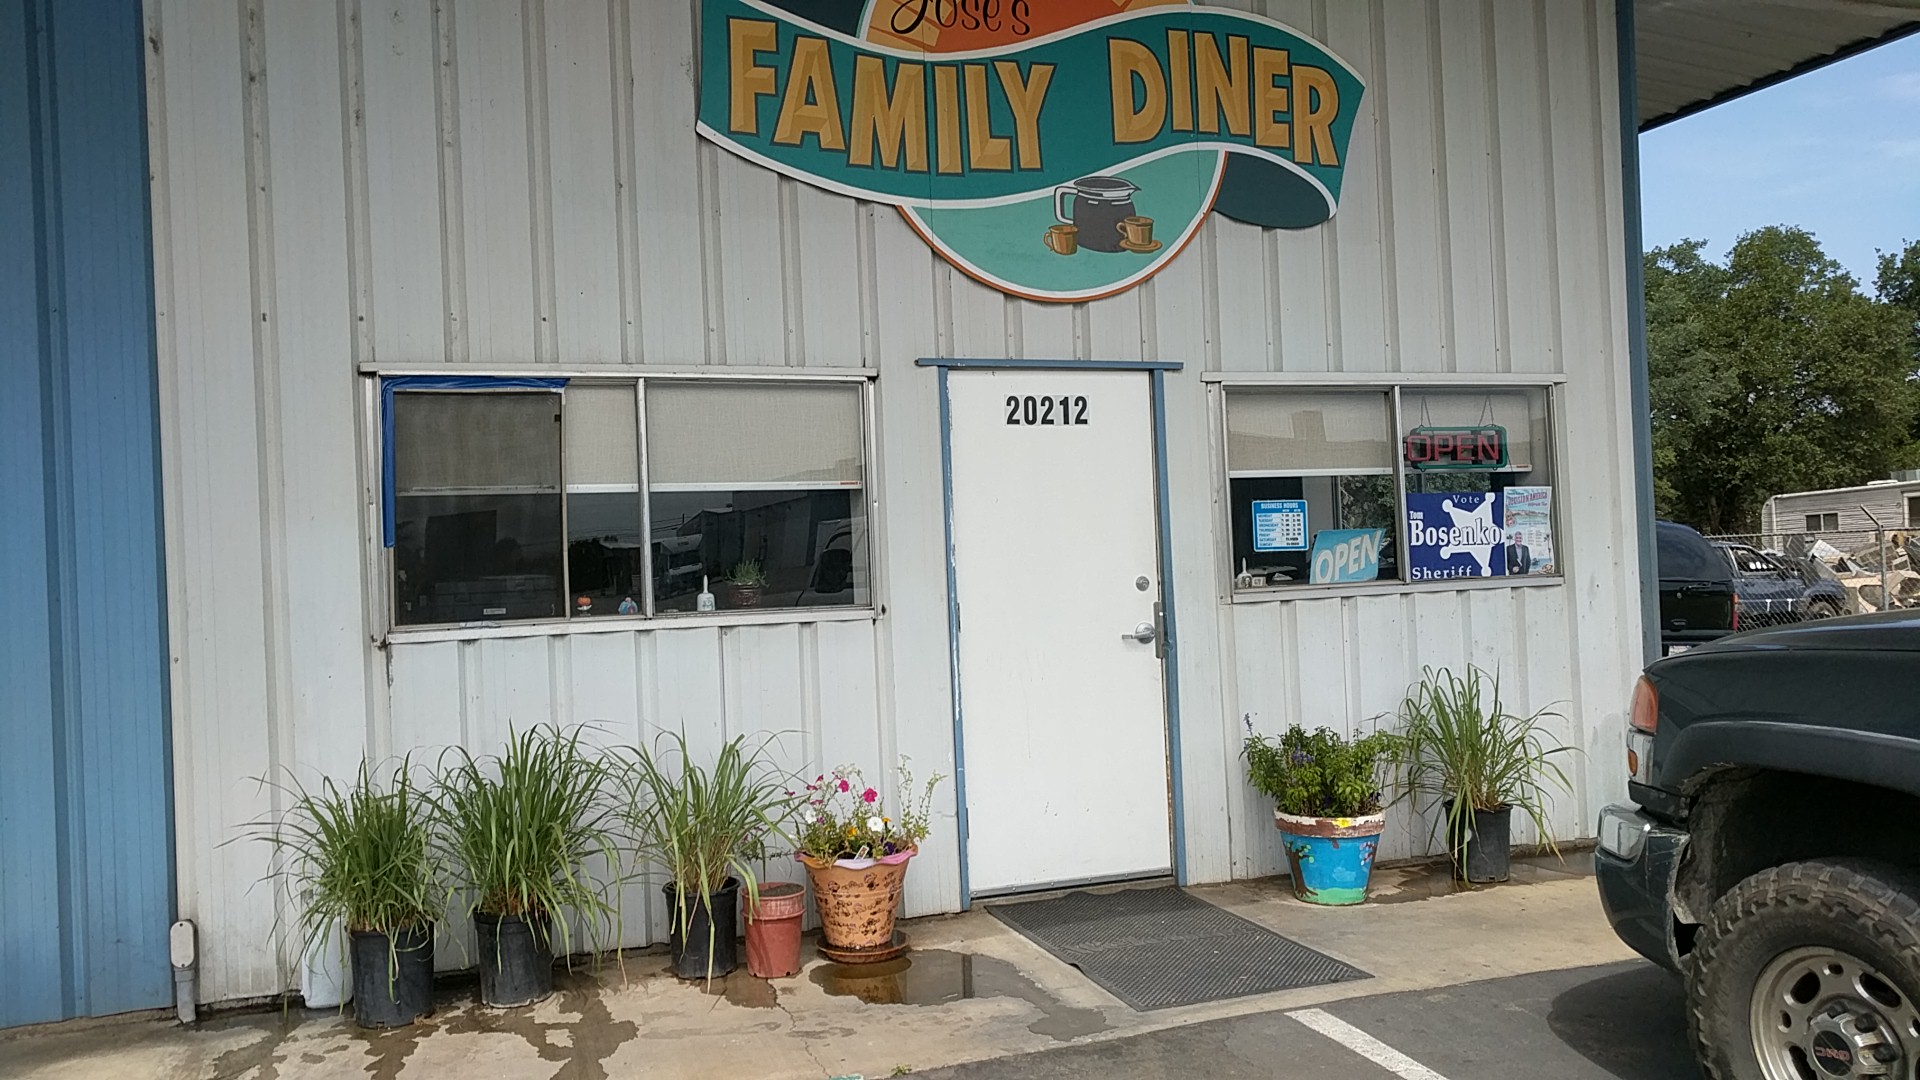 Jose's Family Diner